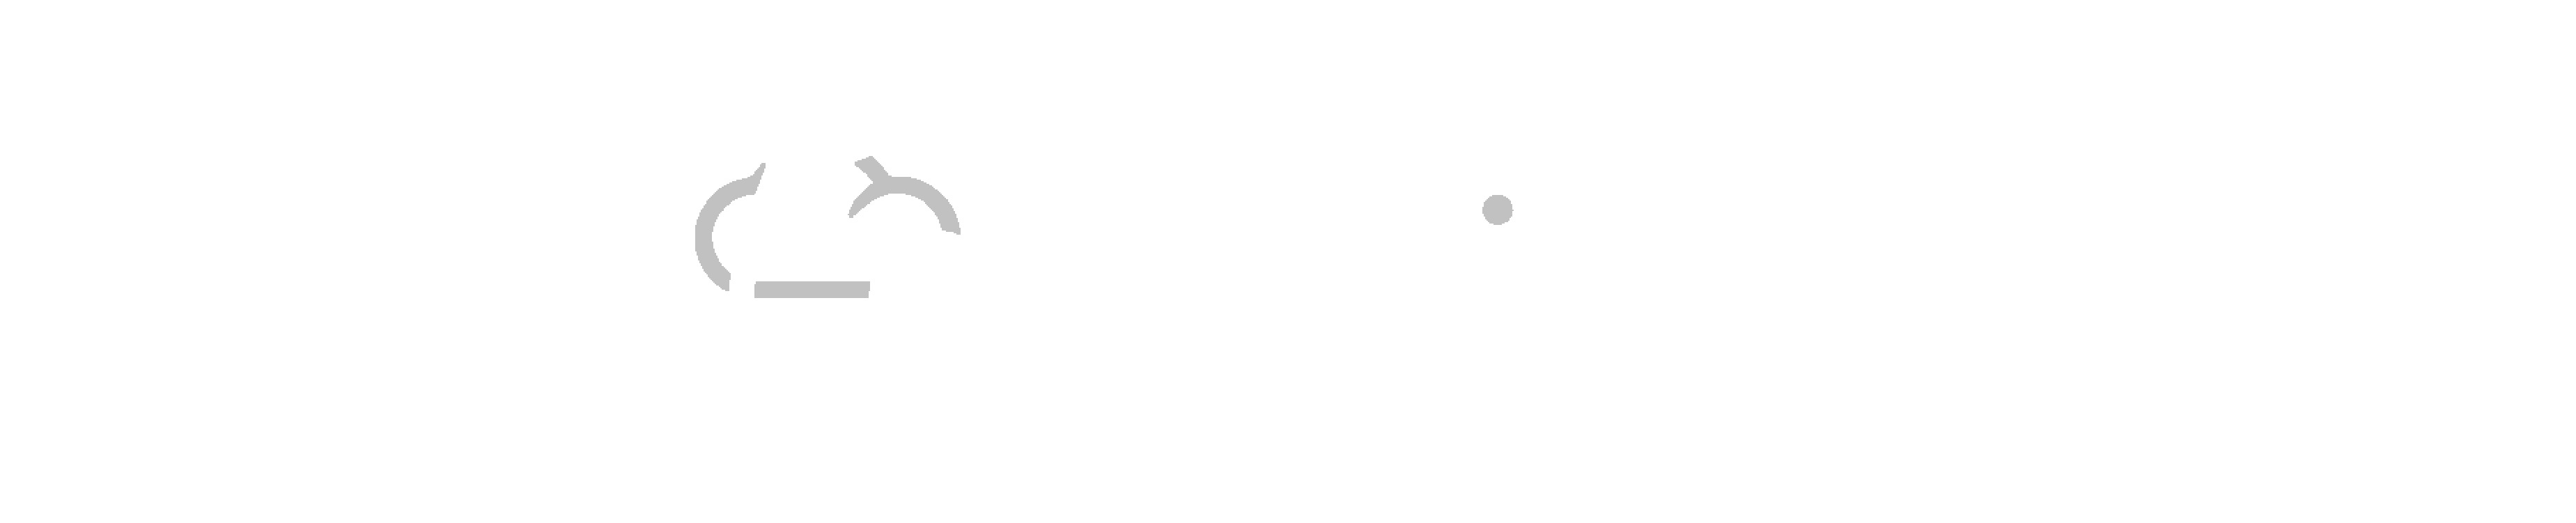 delphisoft